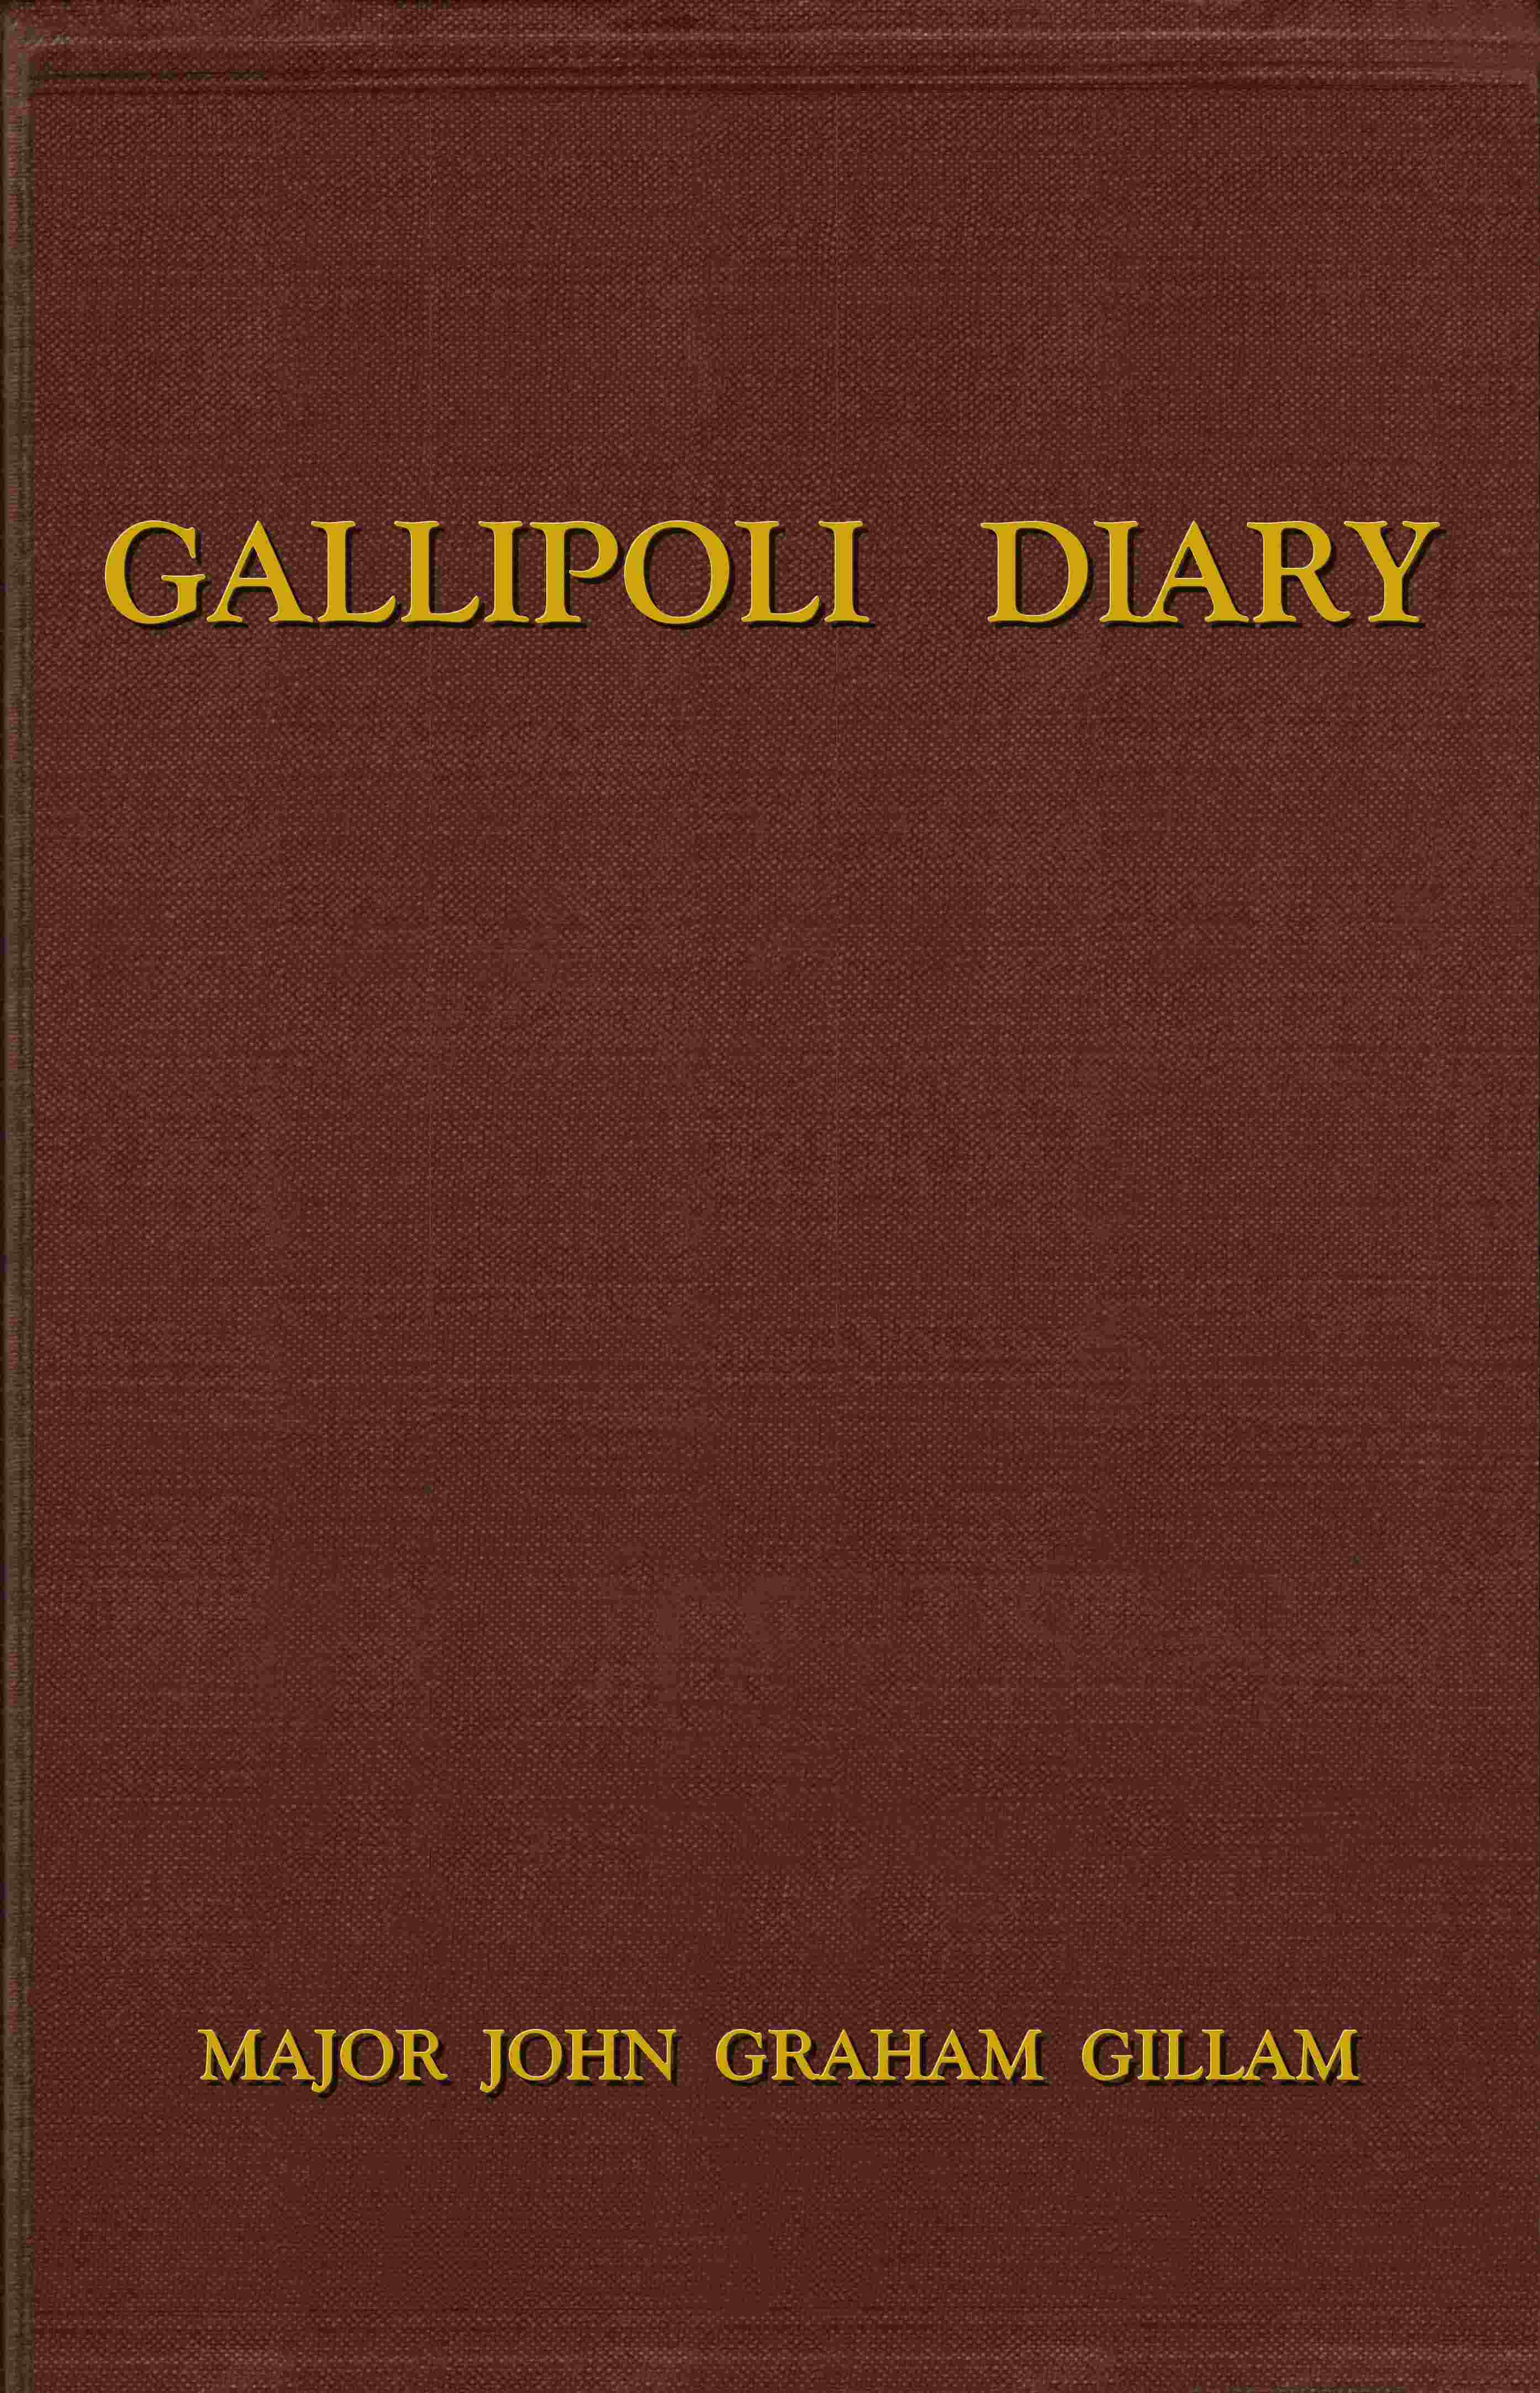 Gallipoli Diary, by Major John Graham Gillam—A Project Gutenberg eBook